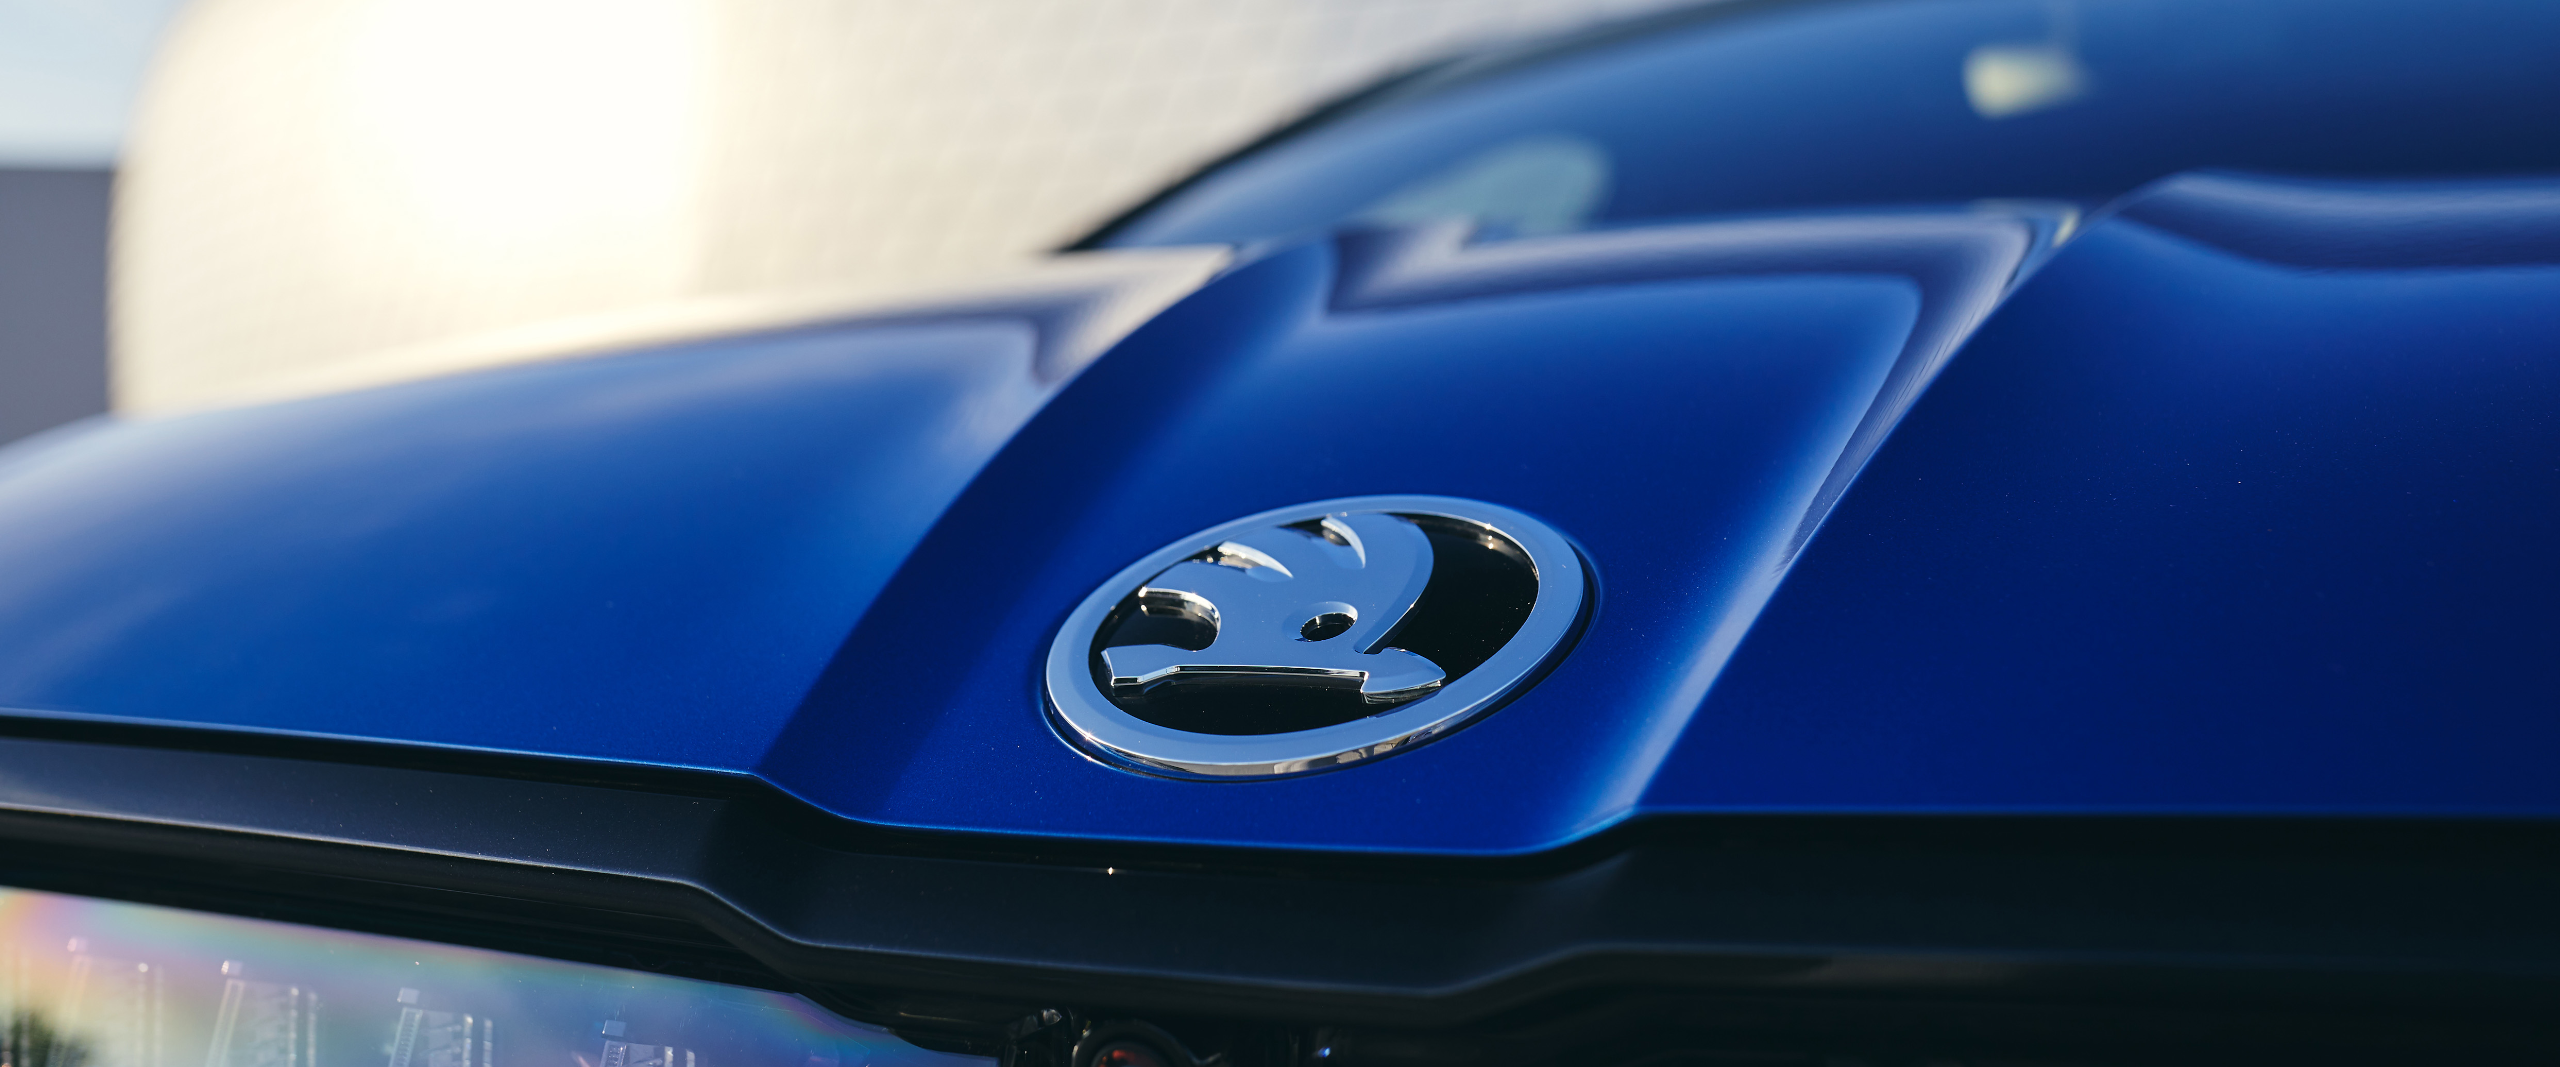 Motorhaueb mit Skoda Logo in blau